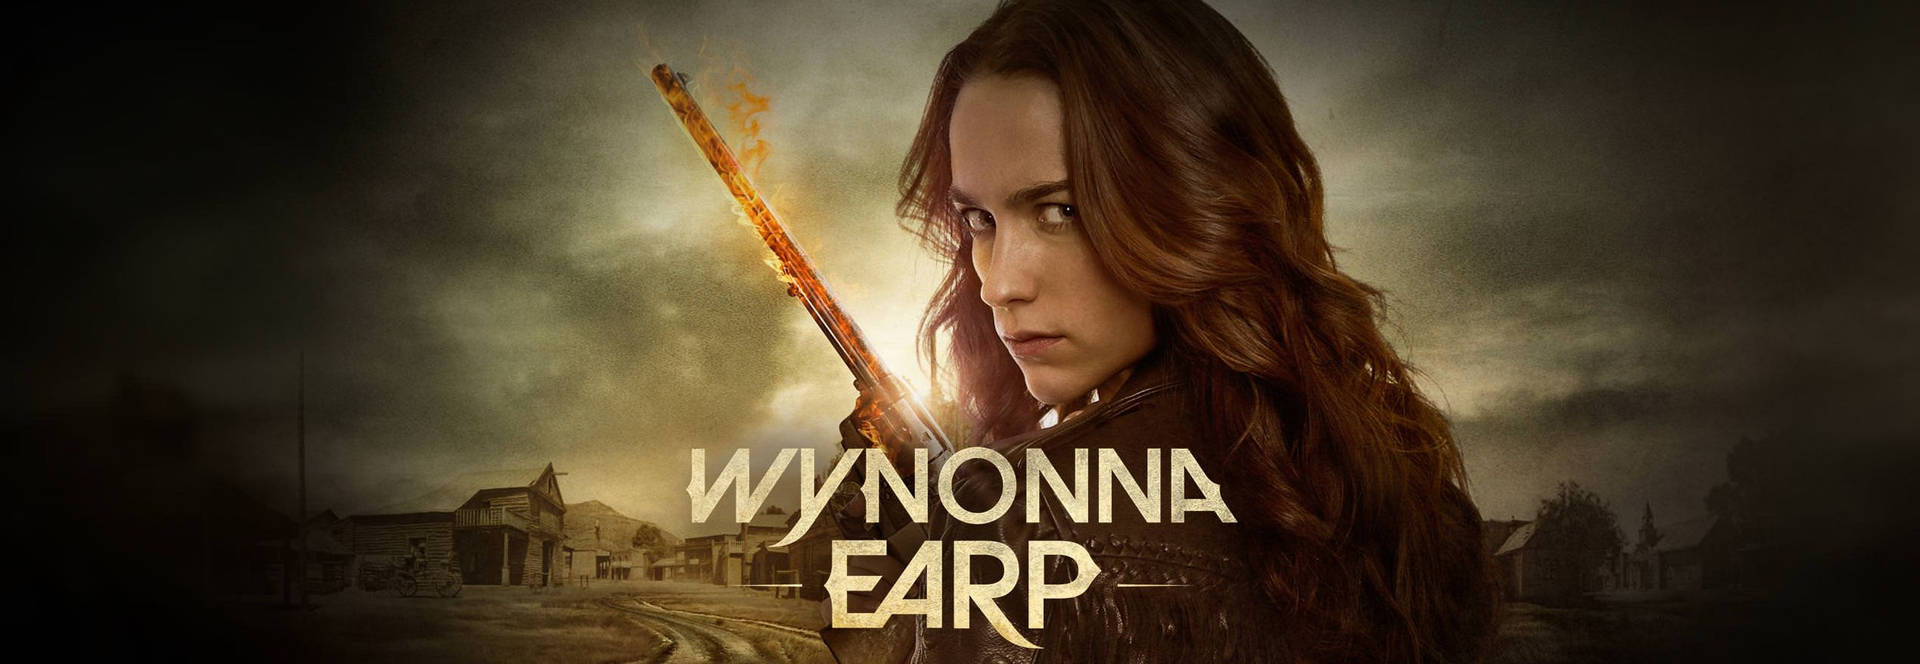 Wynonna Earp TV Series Wallpaper